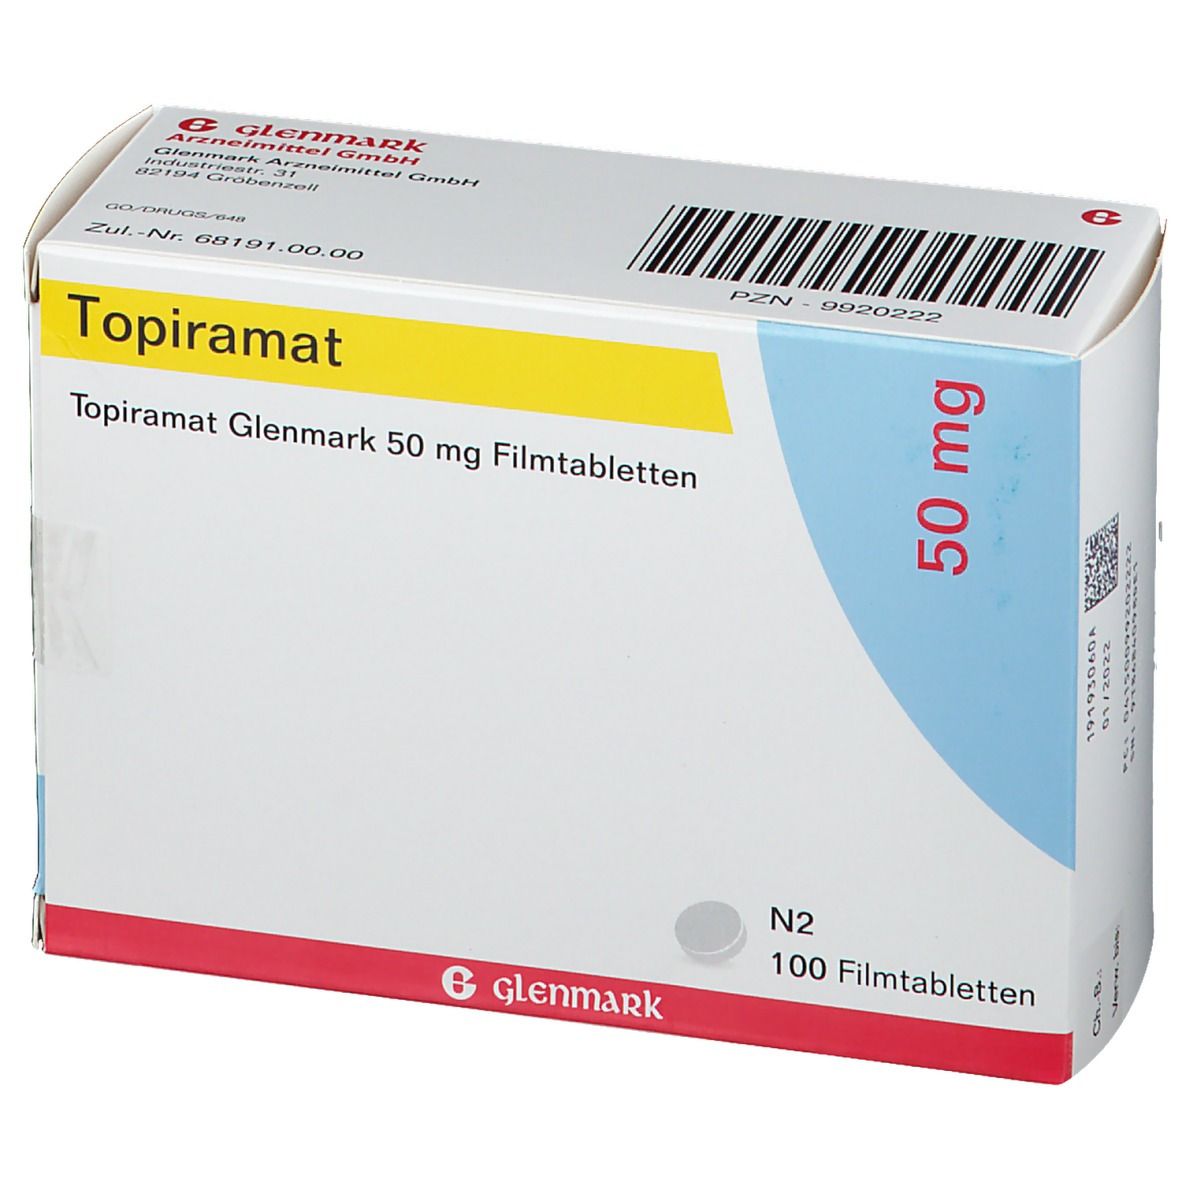 Topiramat Glenmark 50 mg